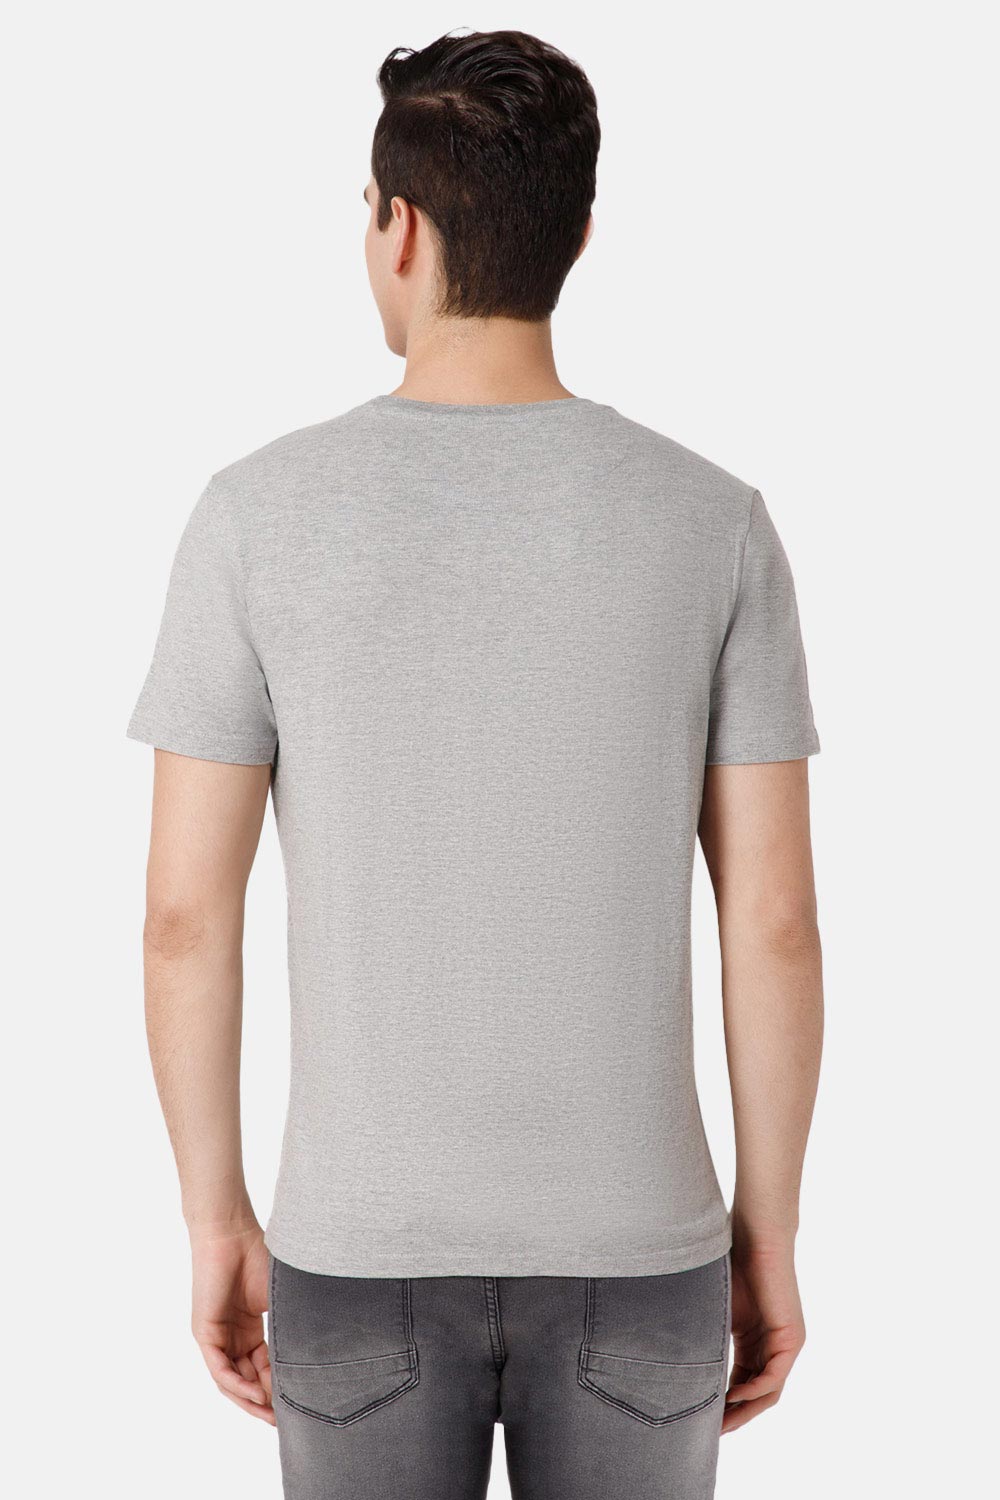 Enhance Printed Crew Neck Men's Casual T-Shirts - Grey - TS37